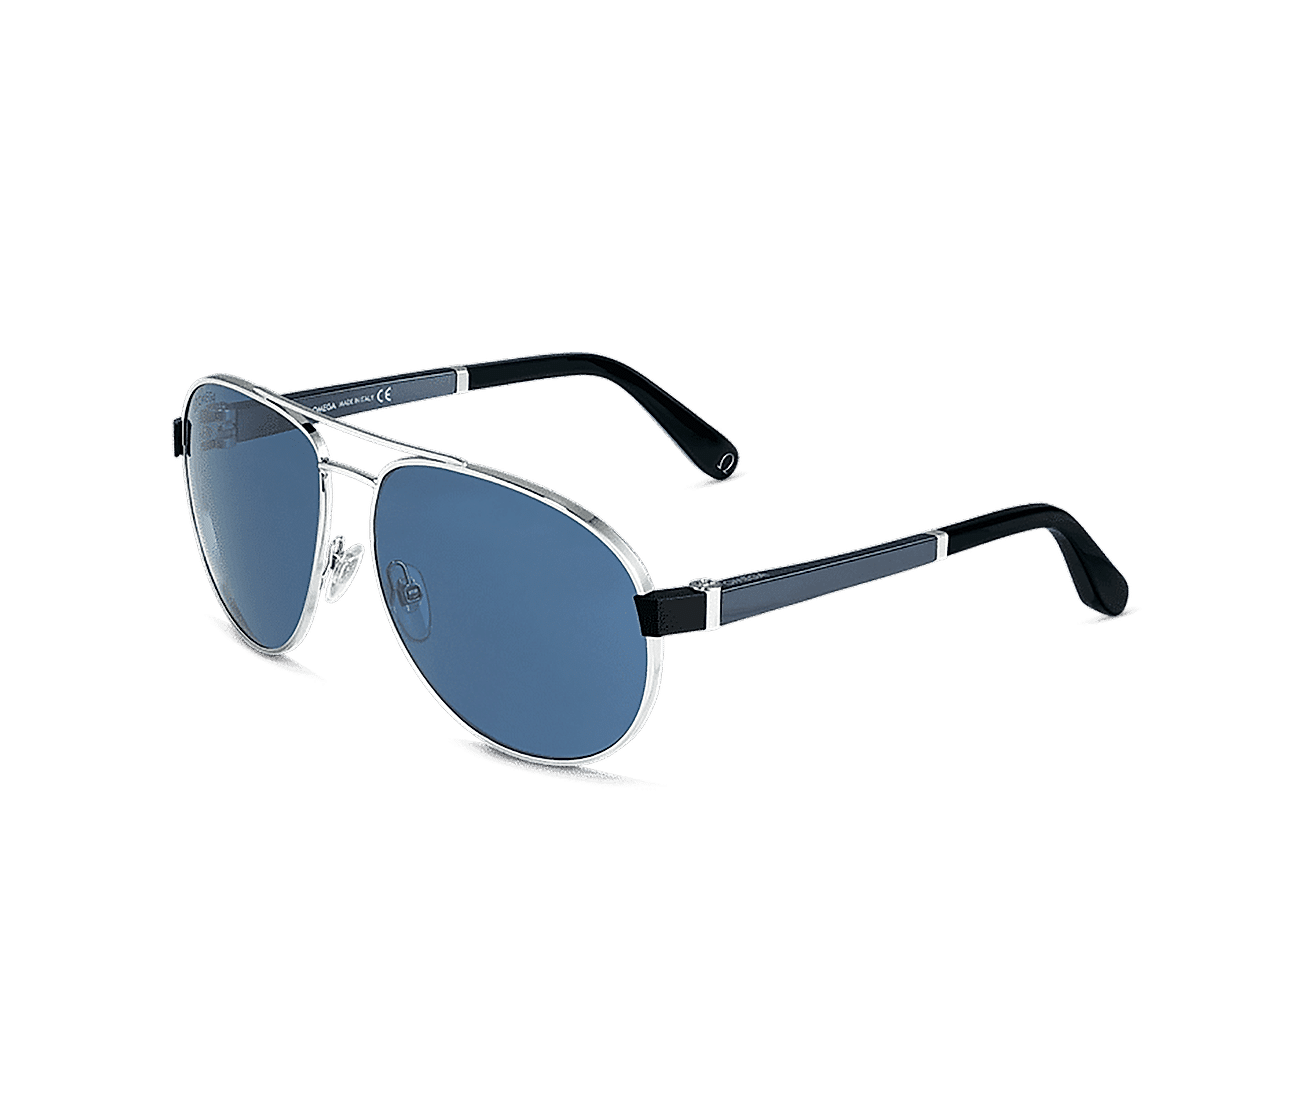 Samsara Wooden Sunglasses